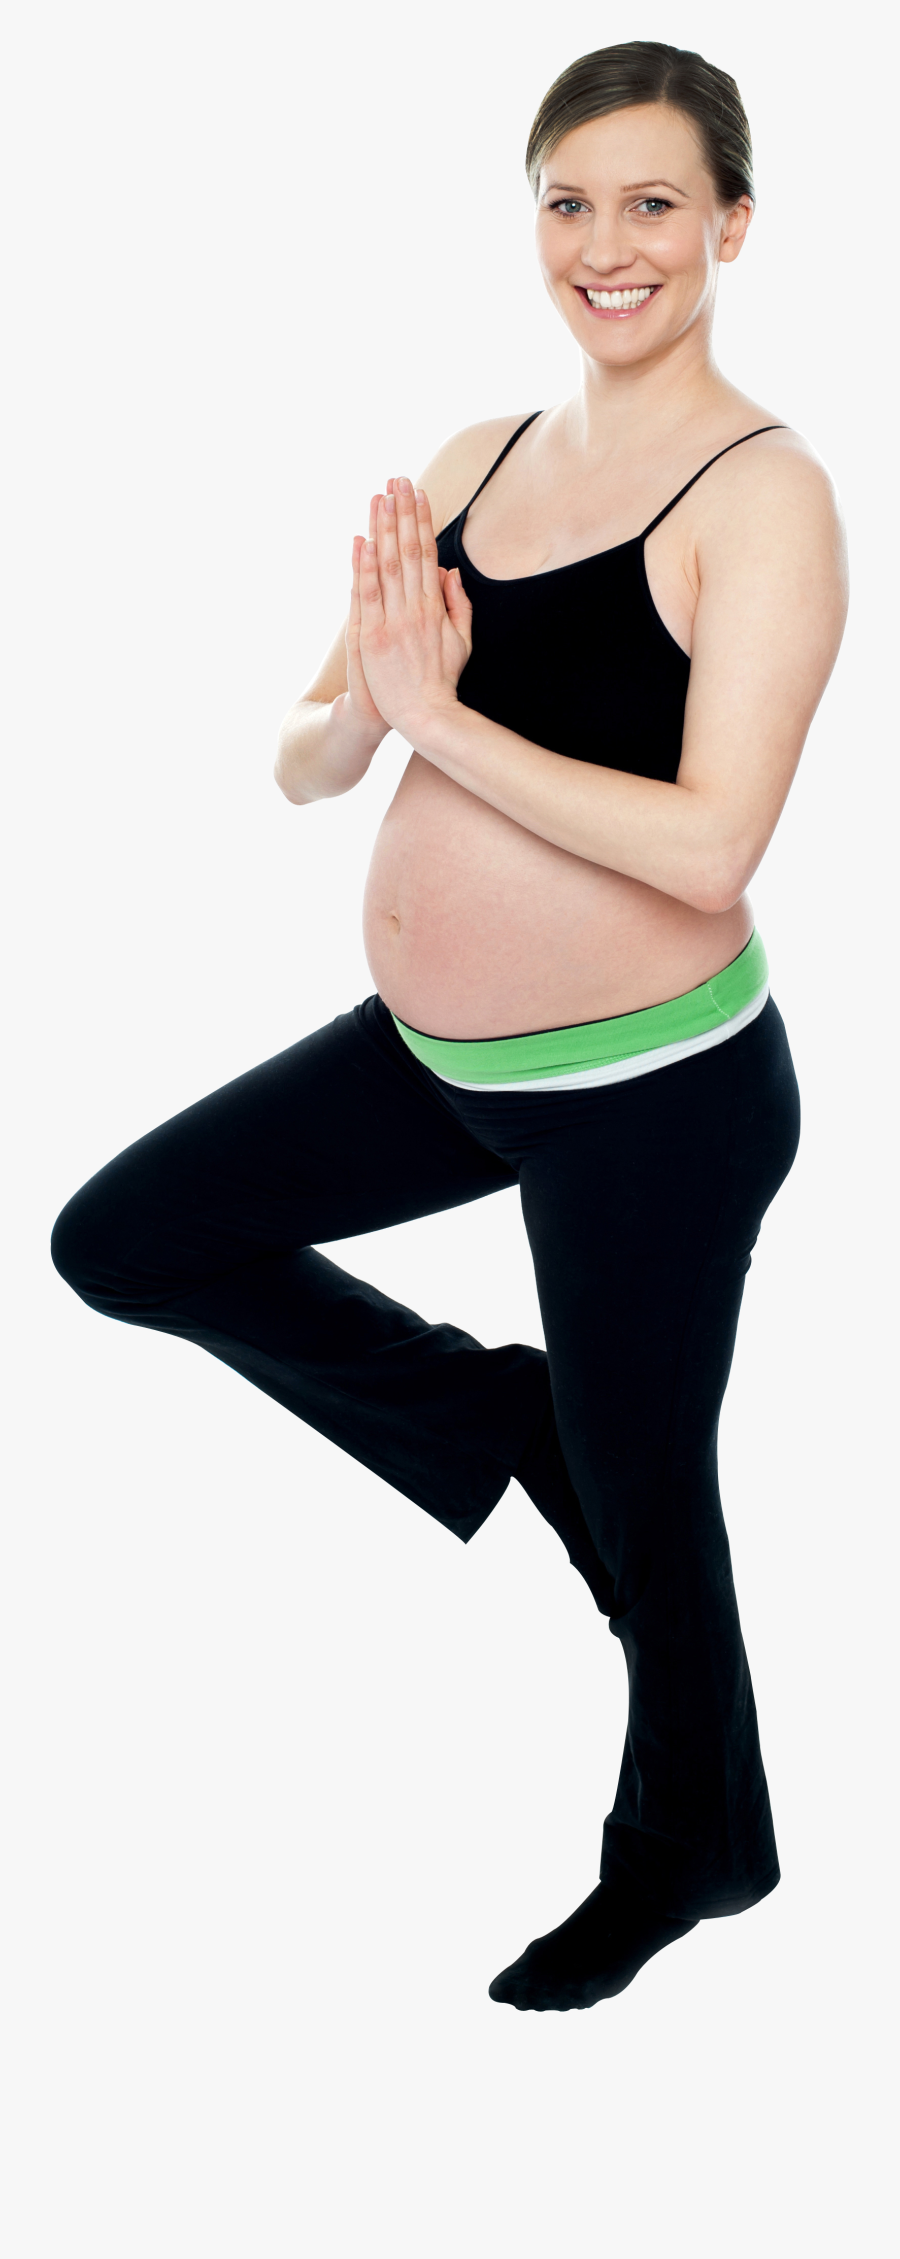 Pregnant Woman Exercise Png Image - Pregnancy, Transparent Clipart